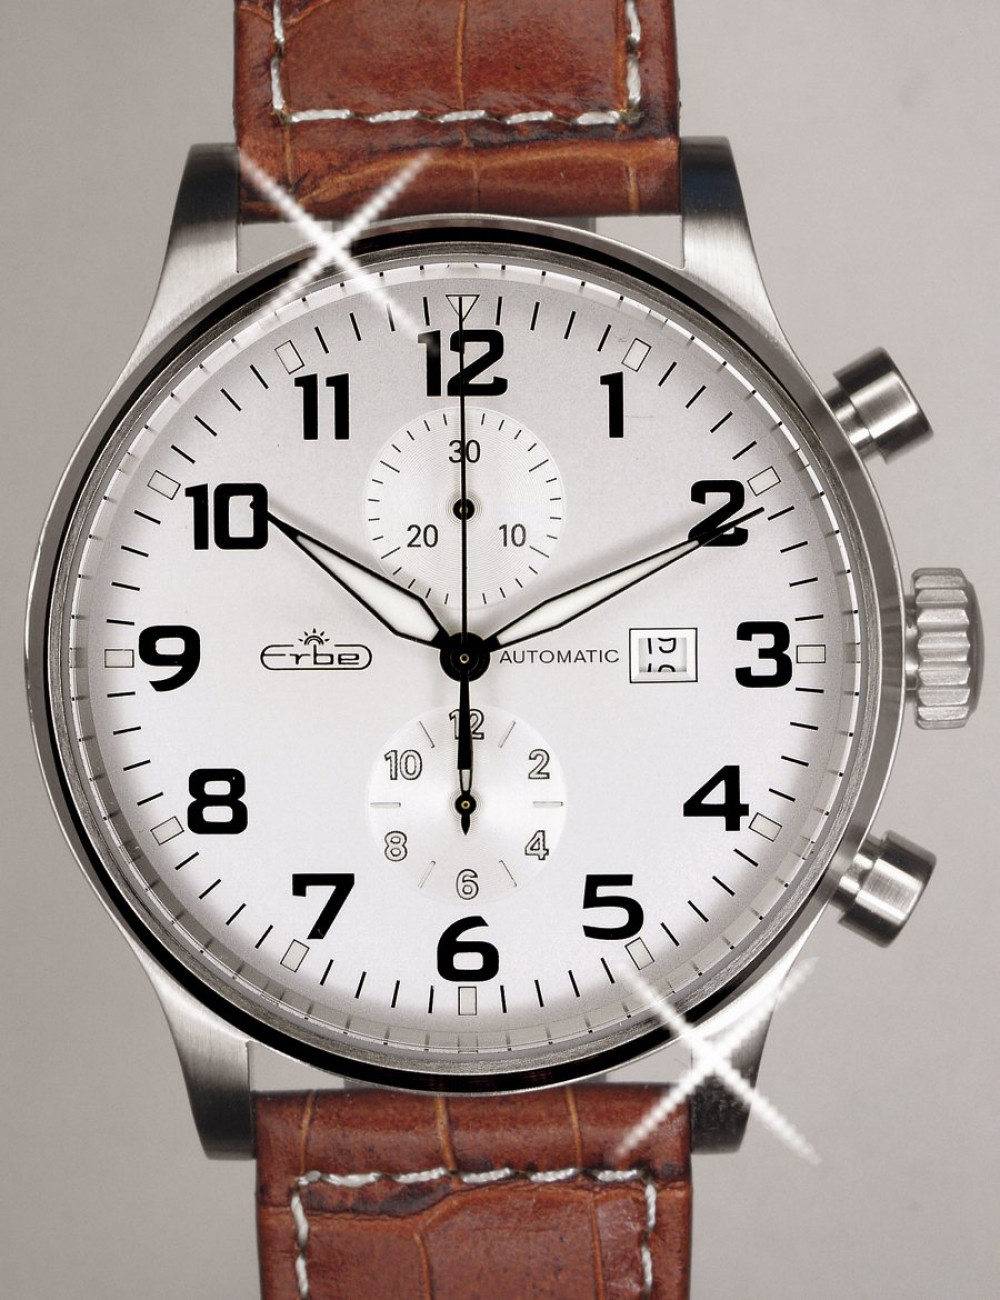 Zegarek firmy Erbe, model Chrono 48 mm